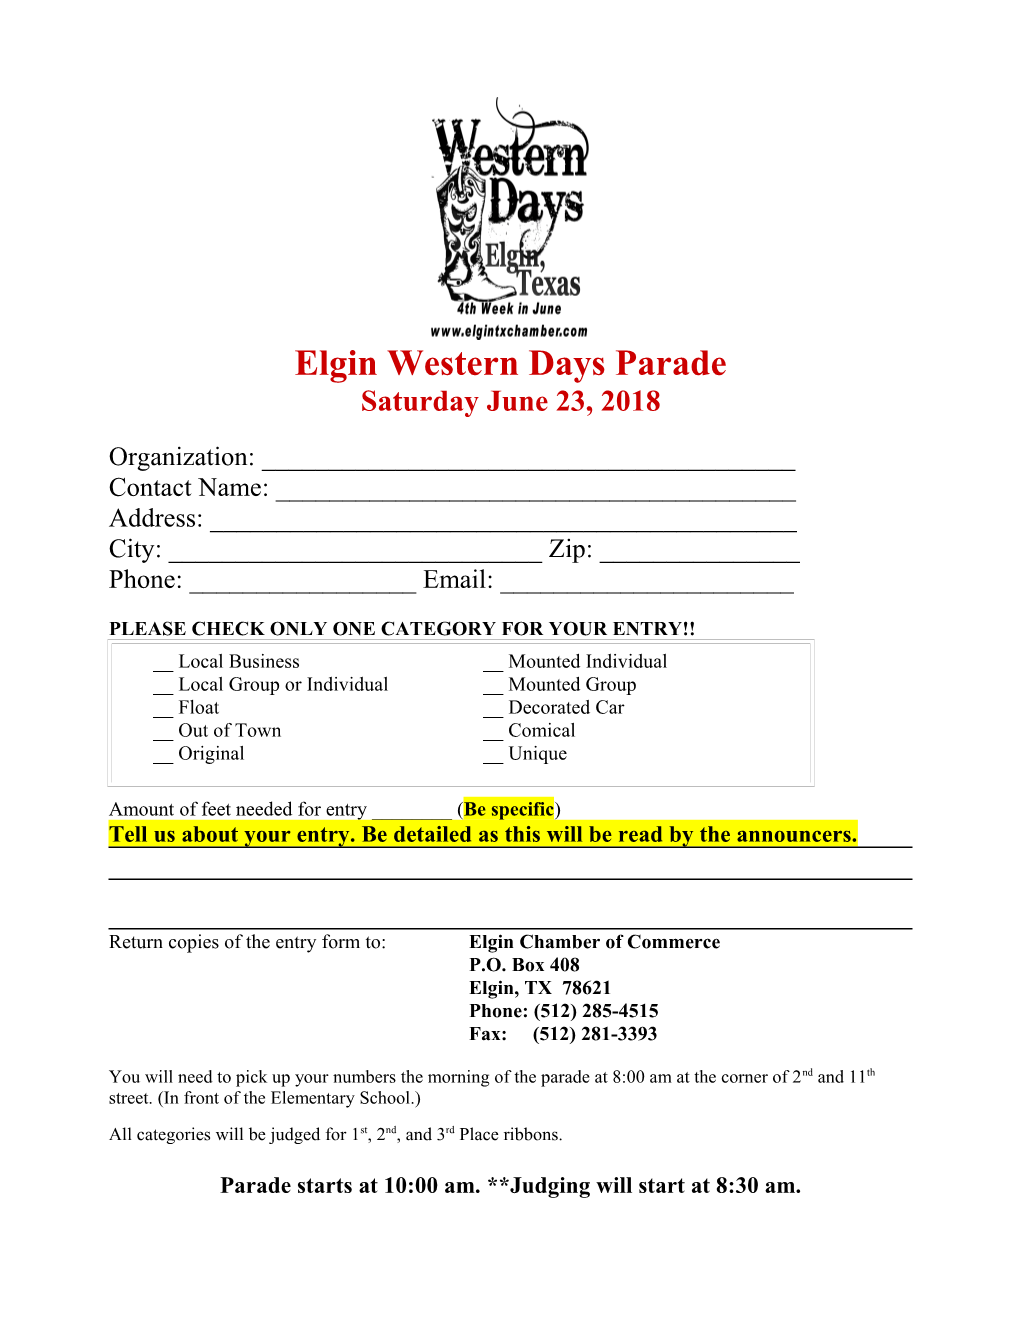 Elgin Western Days Parade